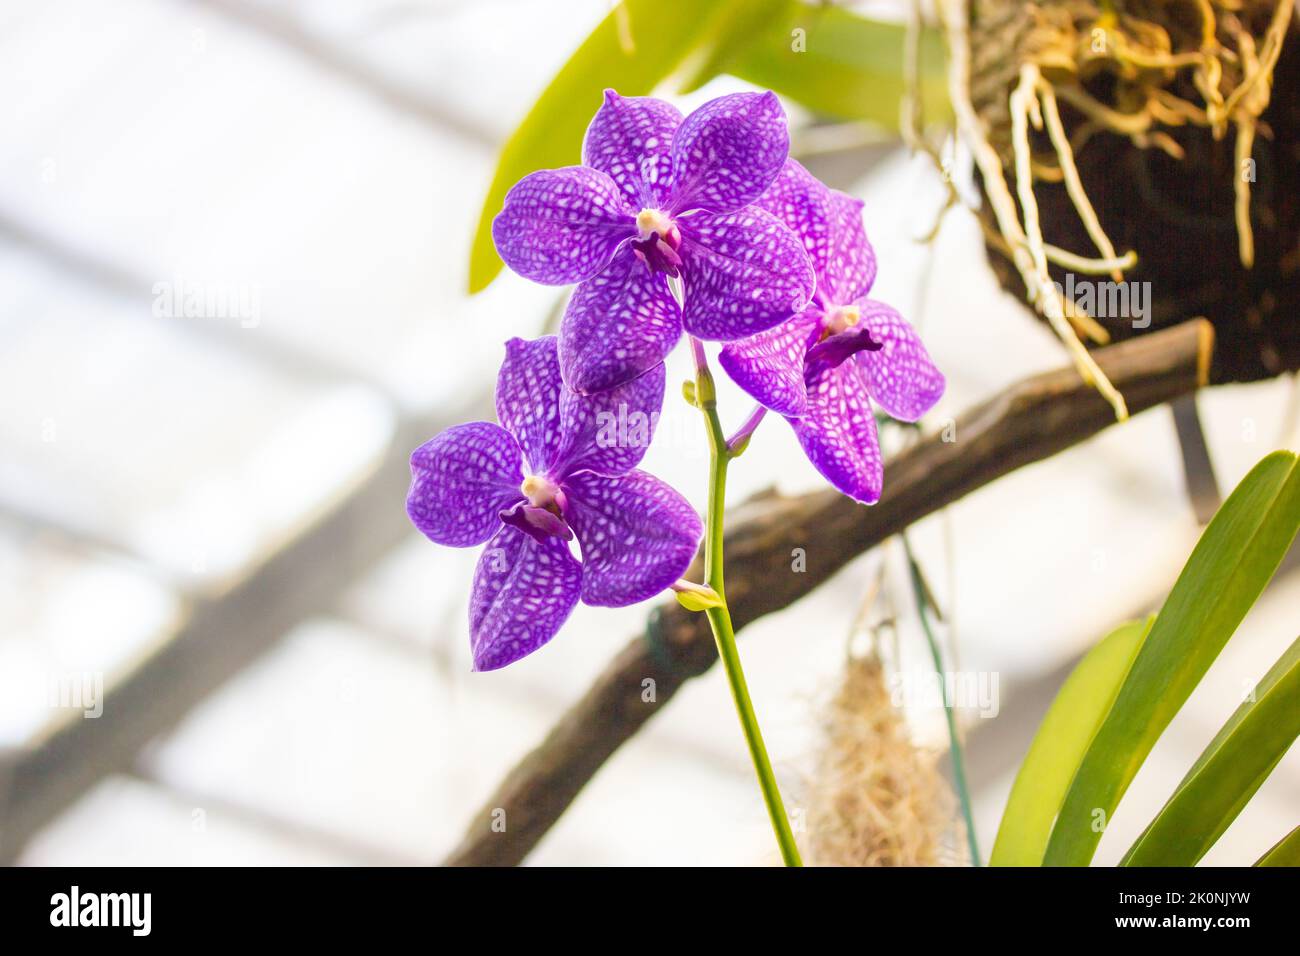 Growing purple orchid flowers in white spots in a botanical garden. Growing exotic Phalaenopsis flower full bloom. Blooming flowers pistil stamen in a Stock Photo